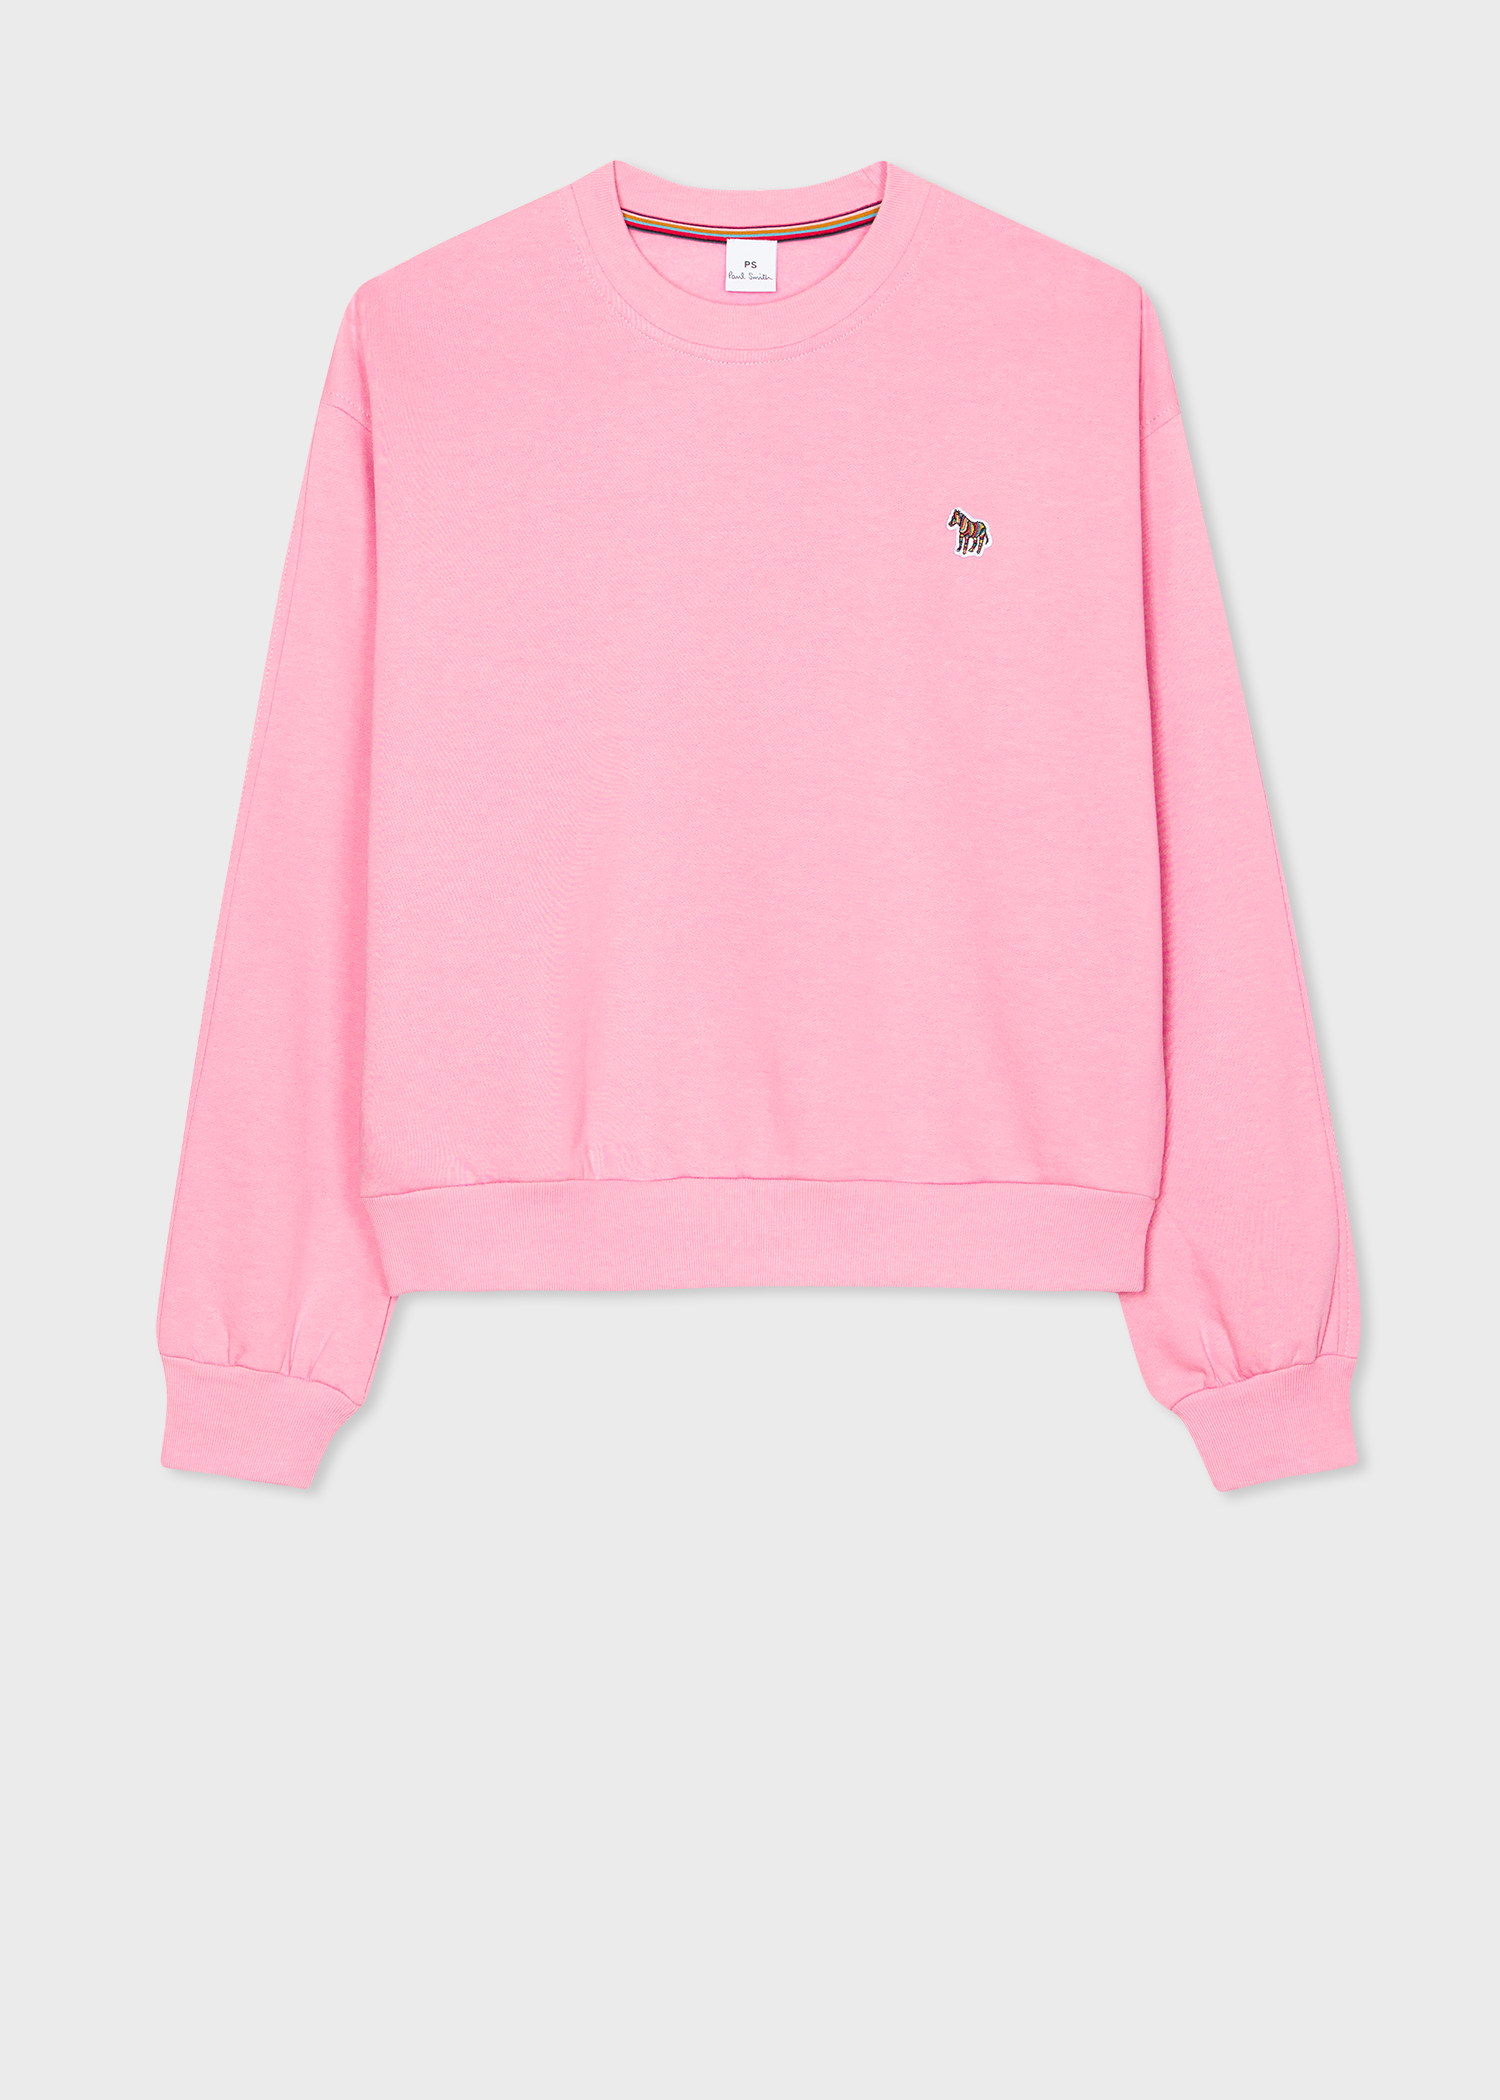 Women's Pink Zebra Logo Cotton Sweatshirt